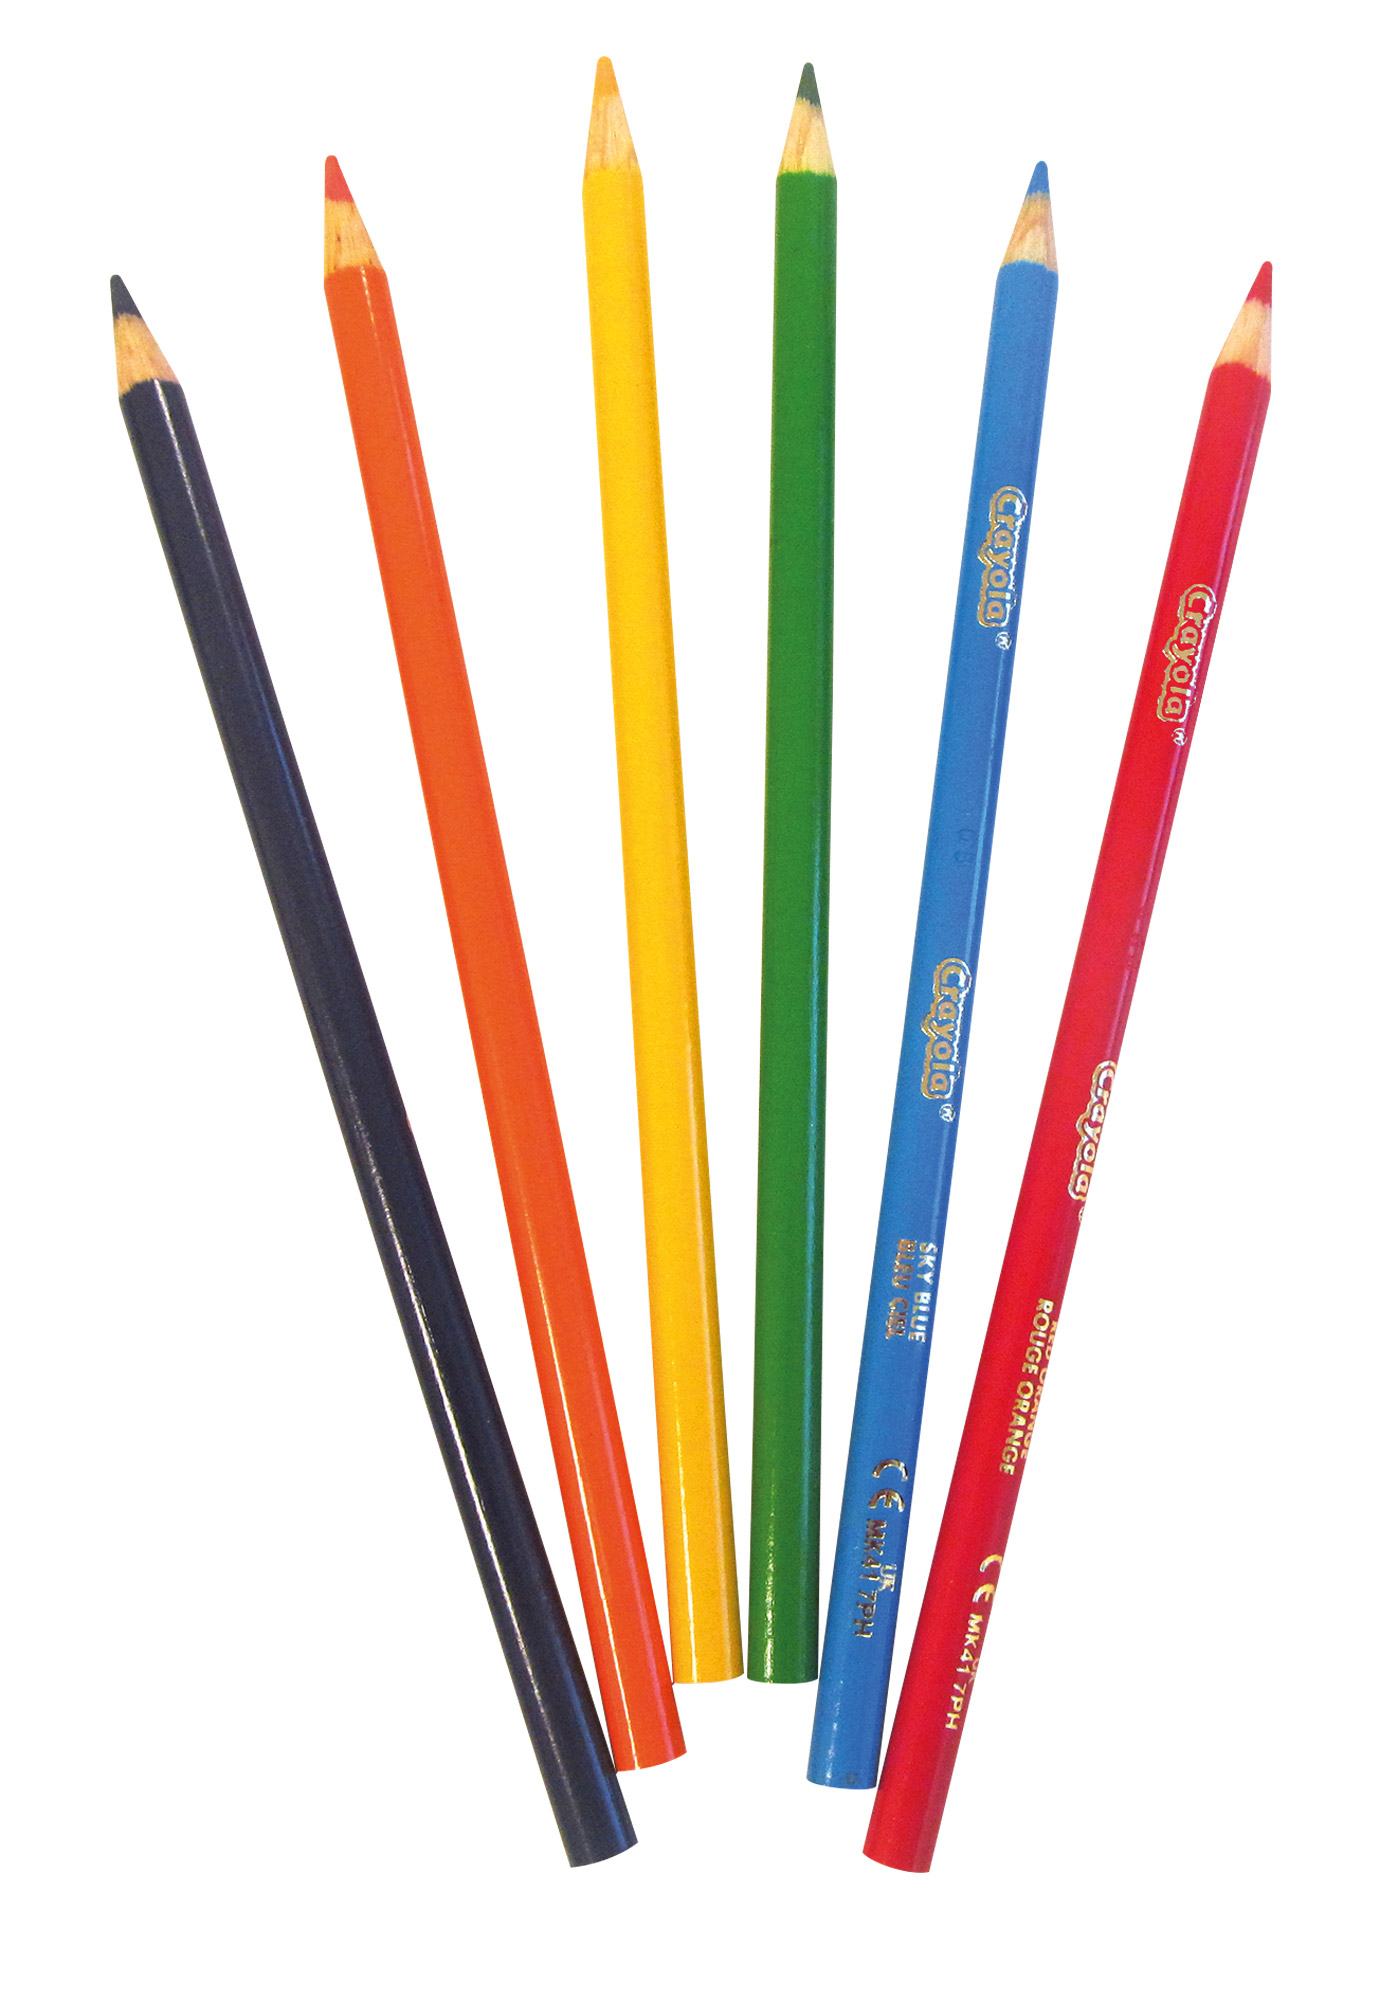 24 matite colorate crayola - CRAYOLA